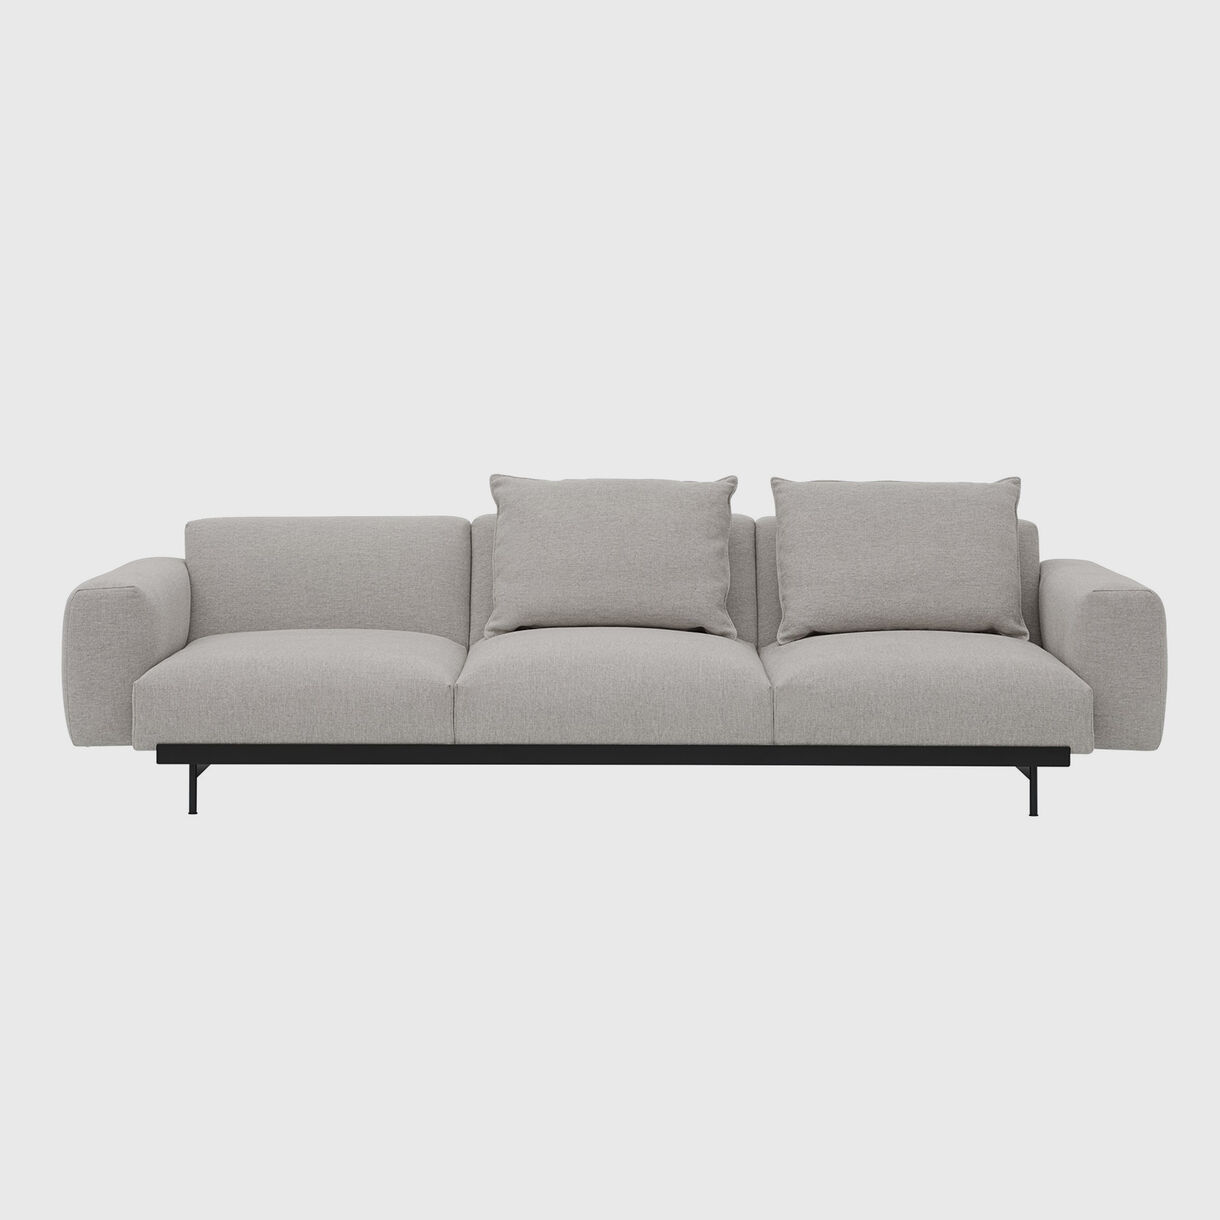 In Situ 3 Seater Sofa, 3-Seater Configuration 1, Clay 12